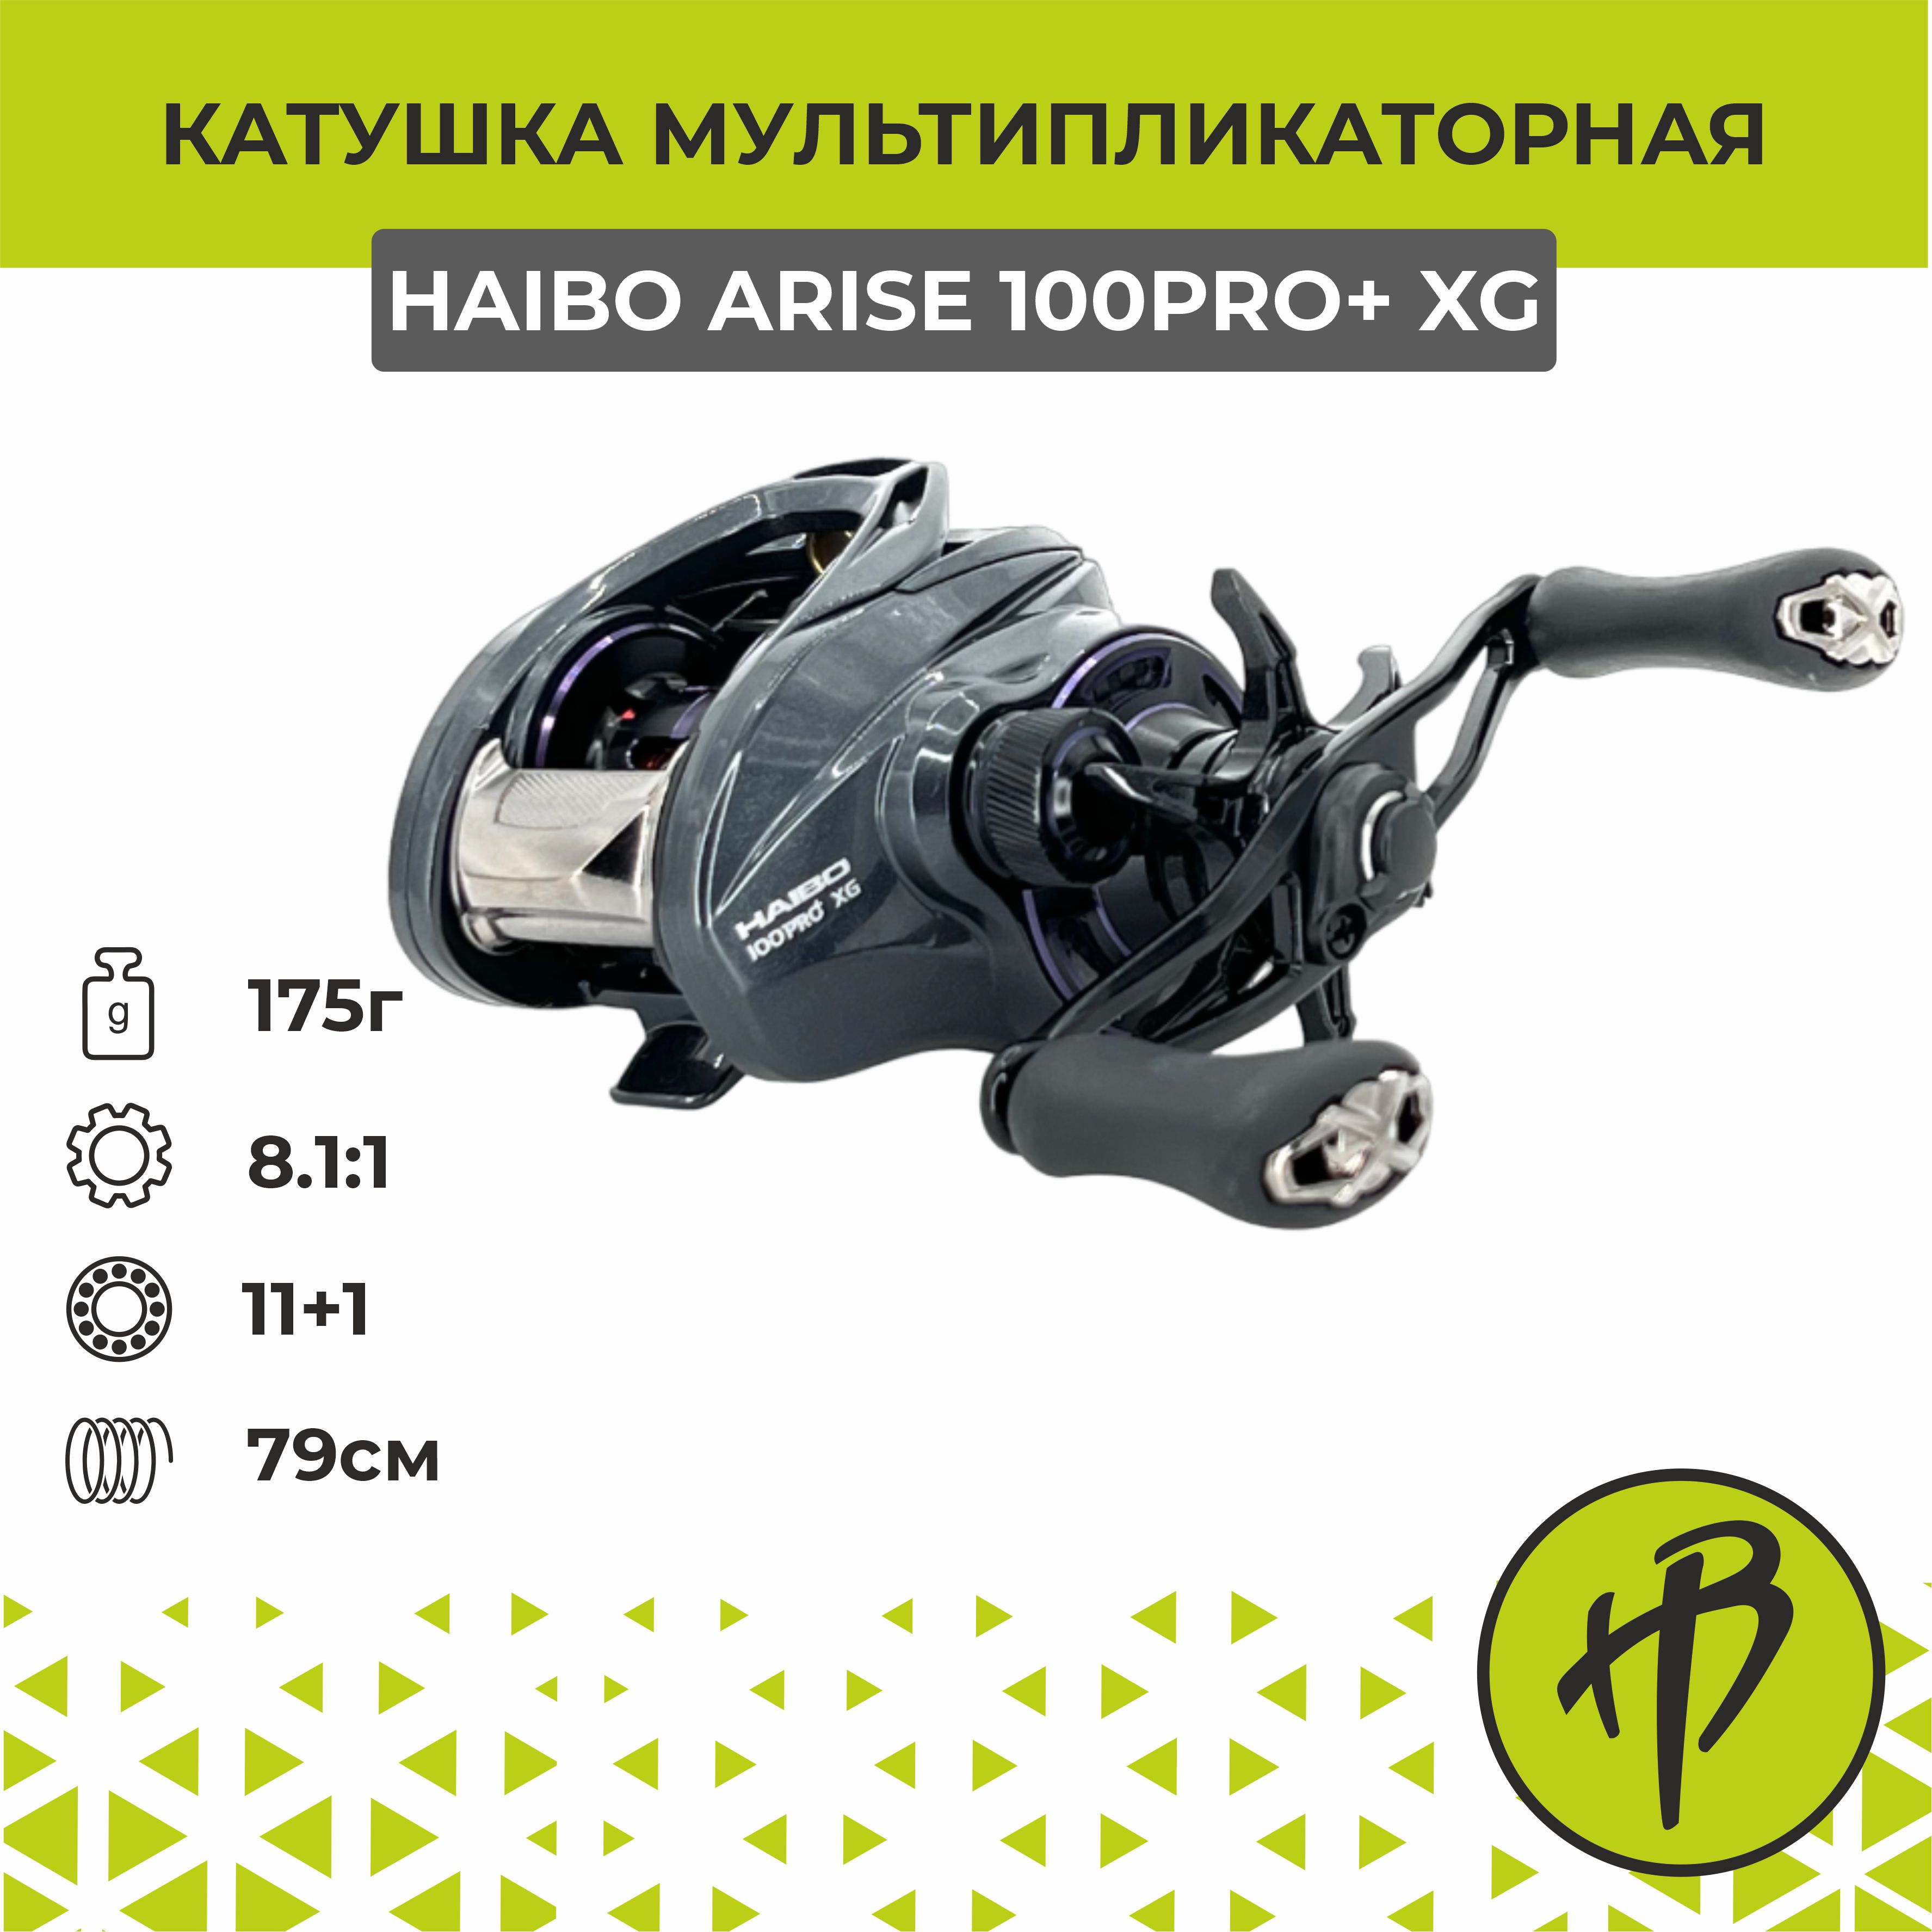 Мультипликаторная катушка Haibo Arise 100PRO+ XG AMC, под правую руку